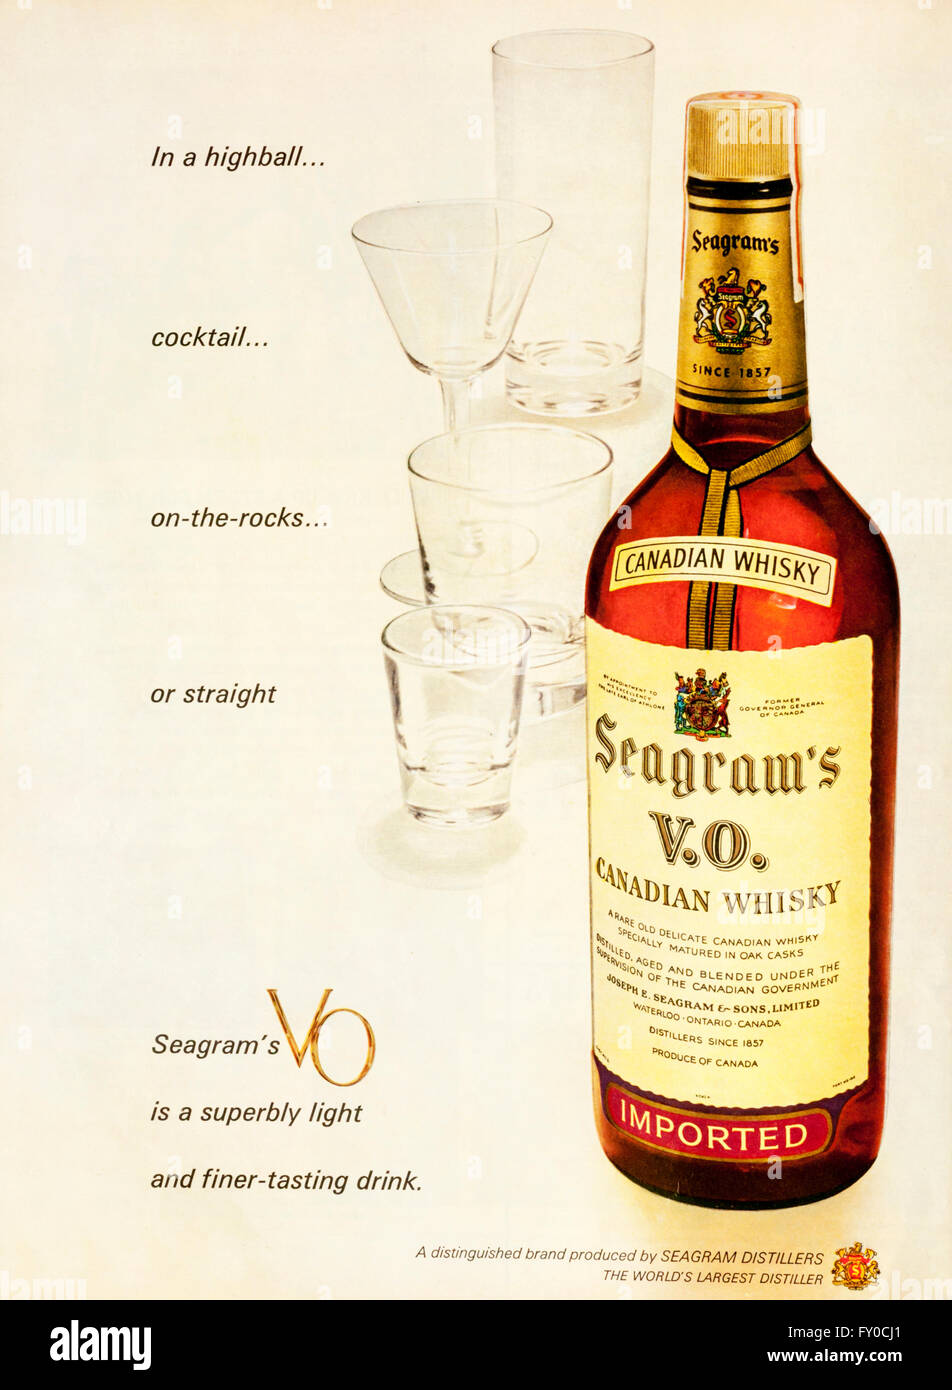 1960s magazine advertisement advertising Seagram's V.O. Canadian Whisky. Stock Photo